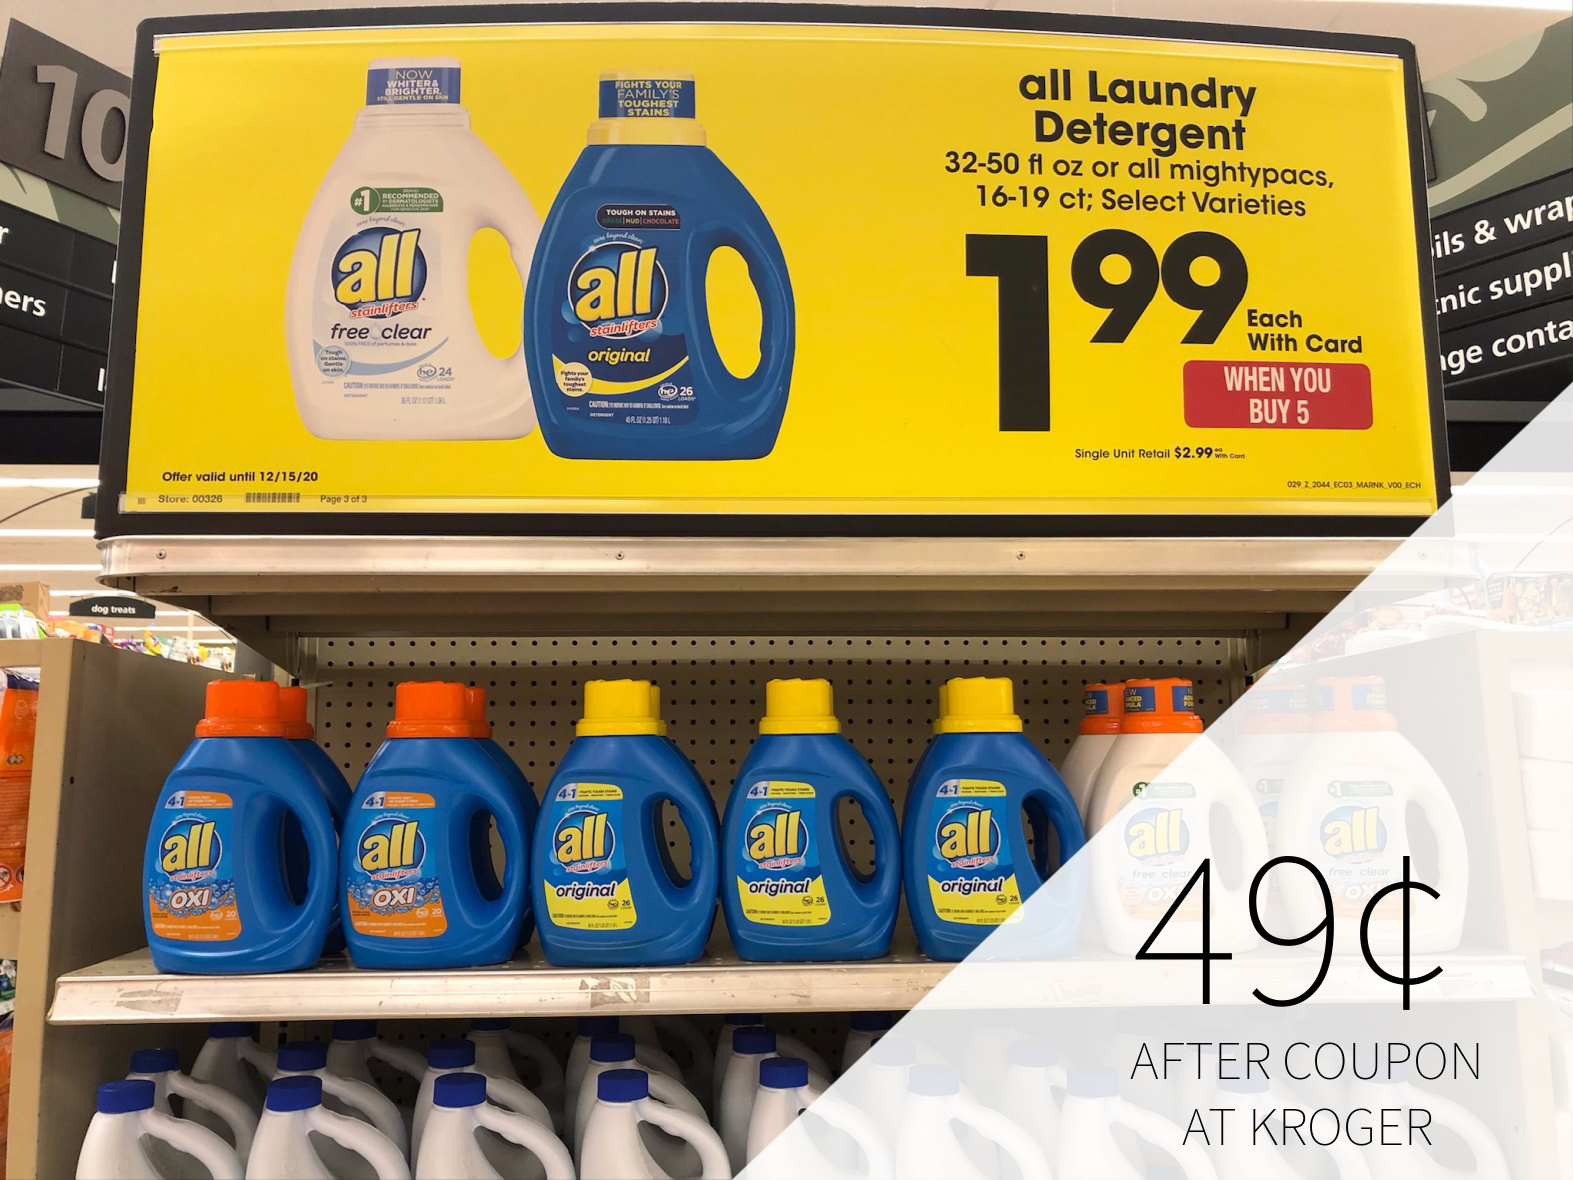 All Liquid Laundry Detergent Just 49¢ At Kroger